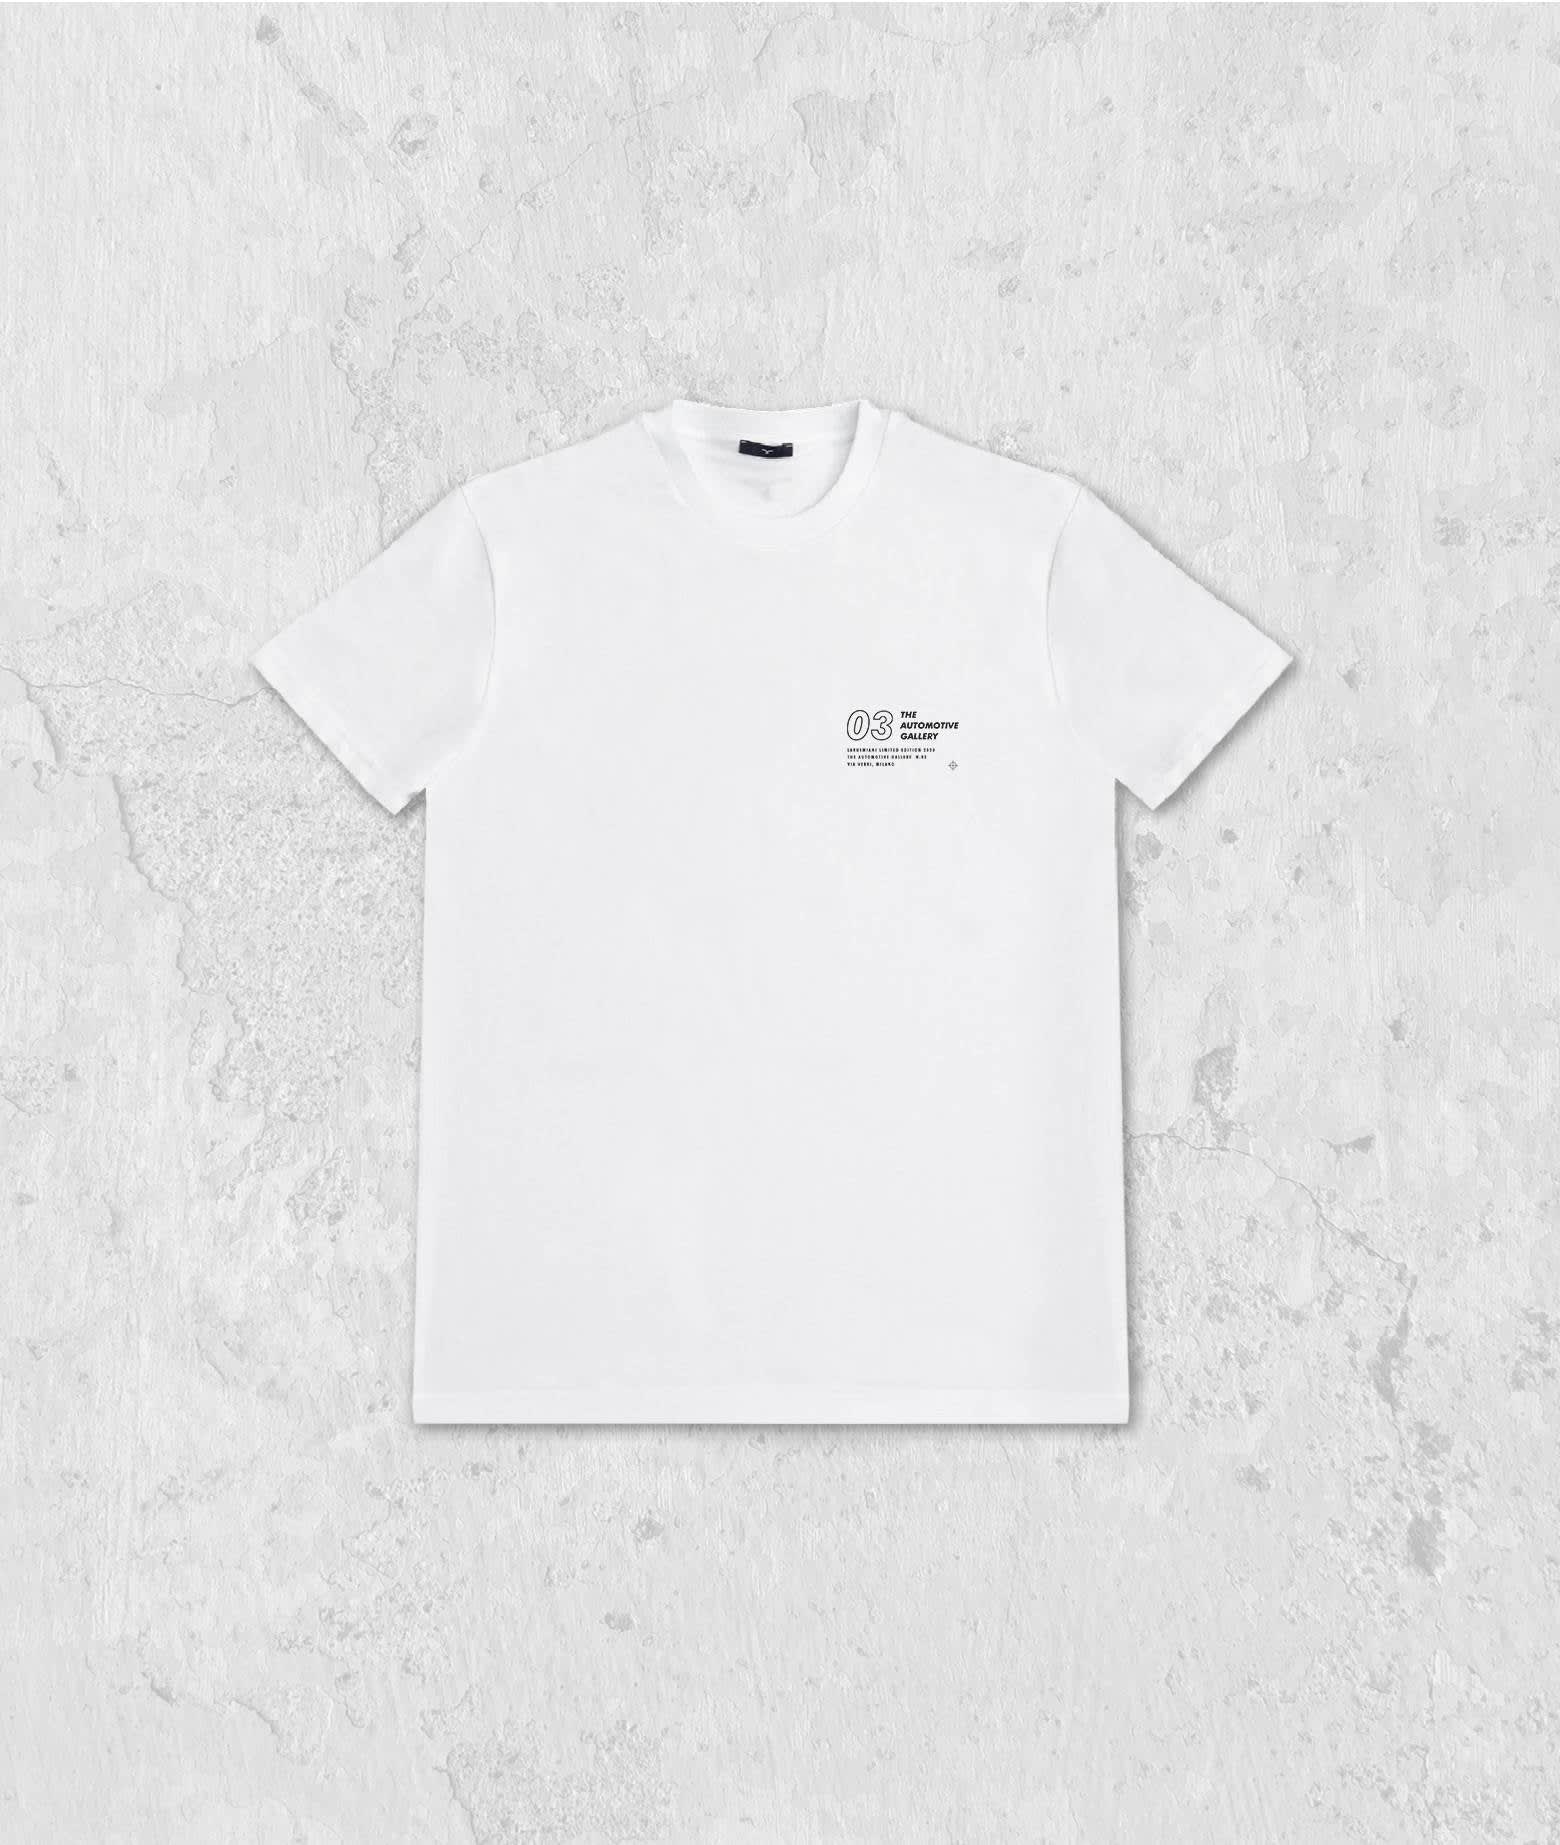 Shop Larusmiani The Automotive Gallery - 03. Porsche 930 Flachbau T-shirt In White